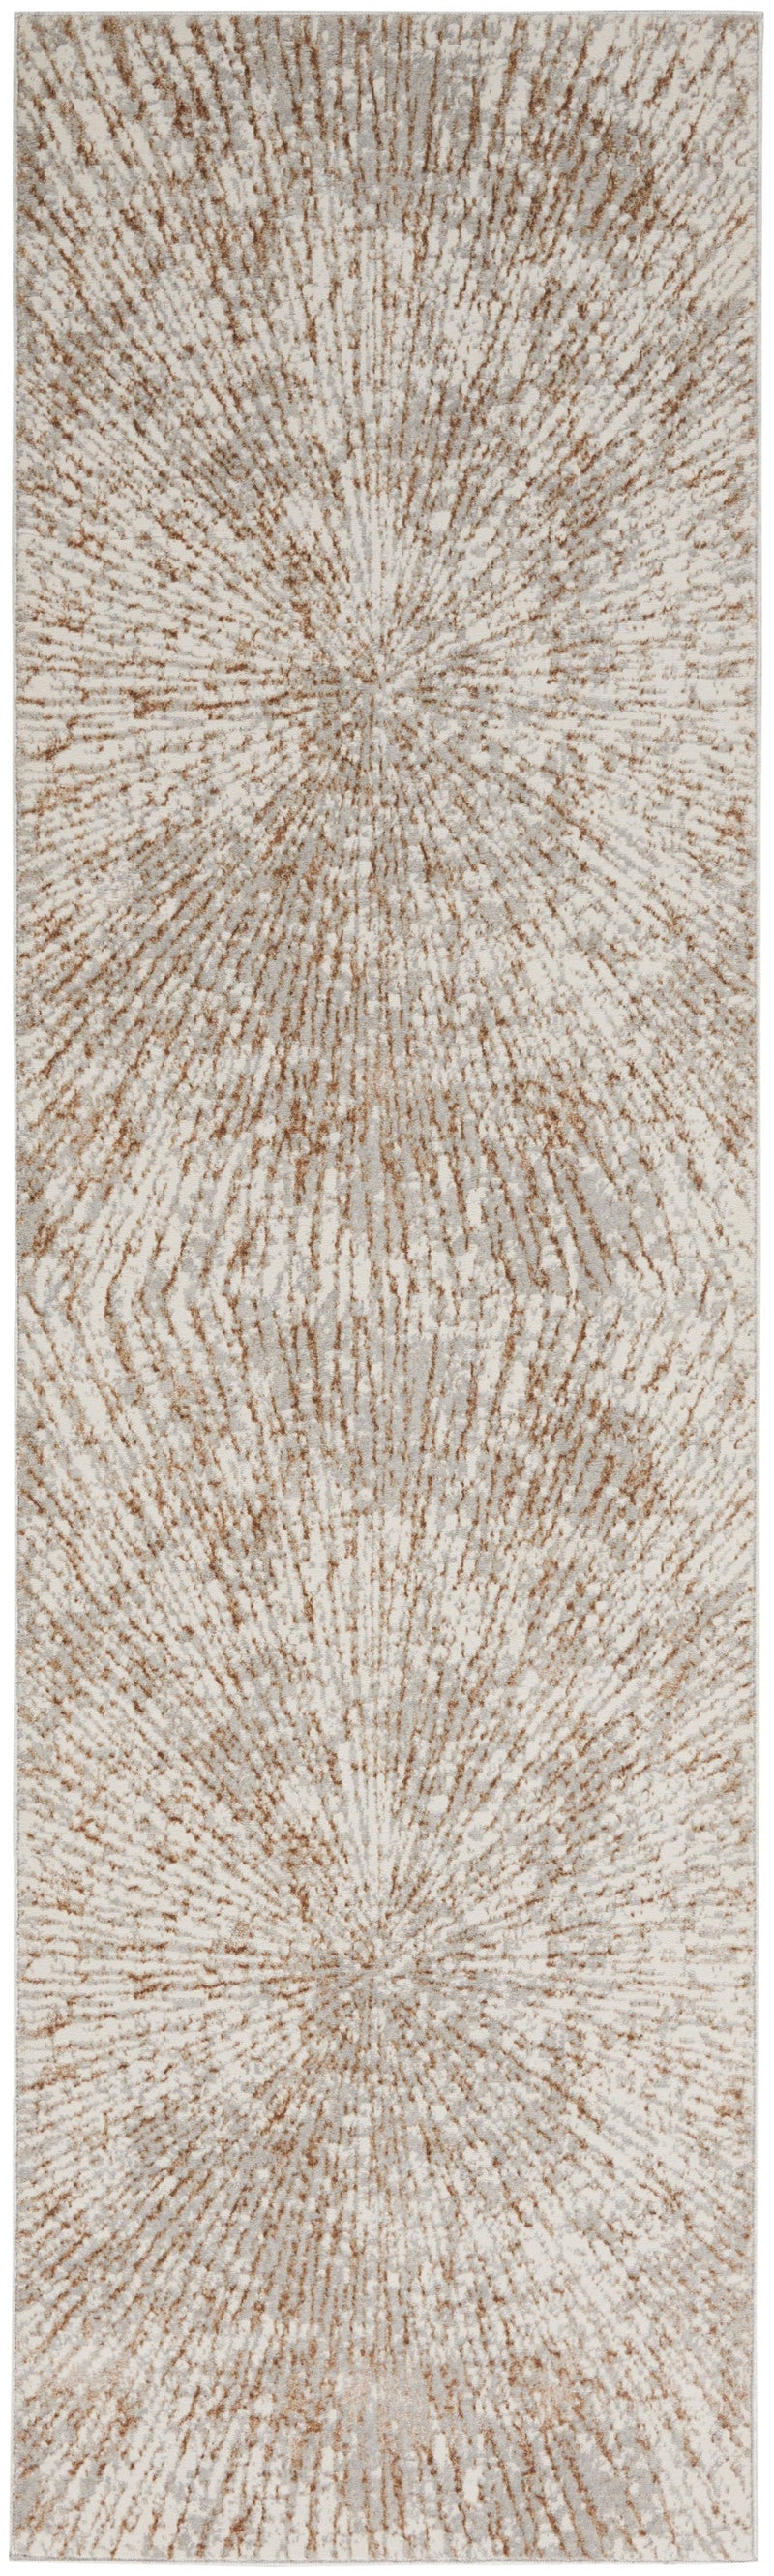 media image for metallic grey mocha rug by nourison 99446852892 redo 2 216